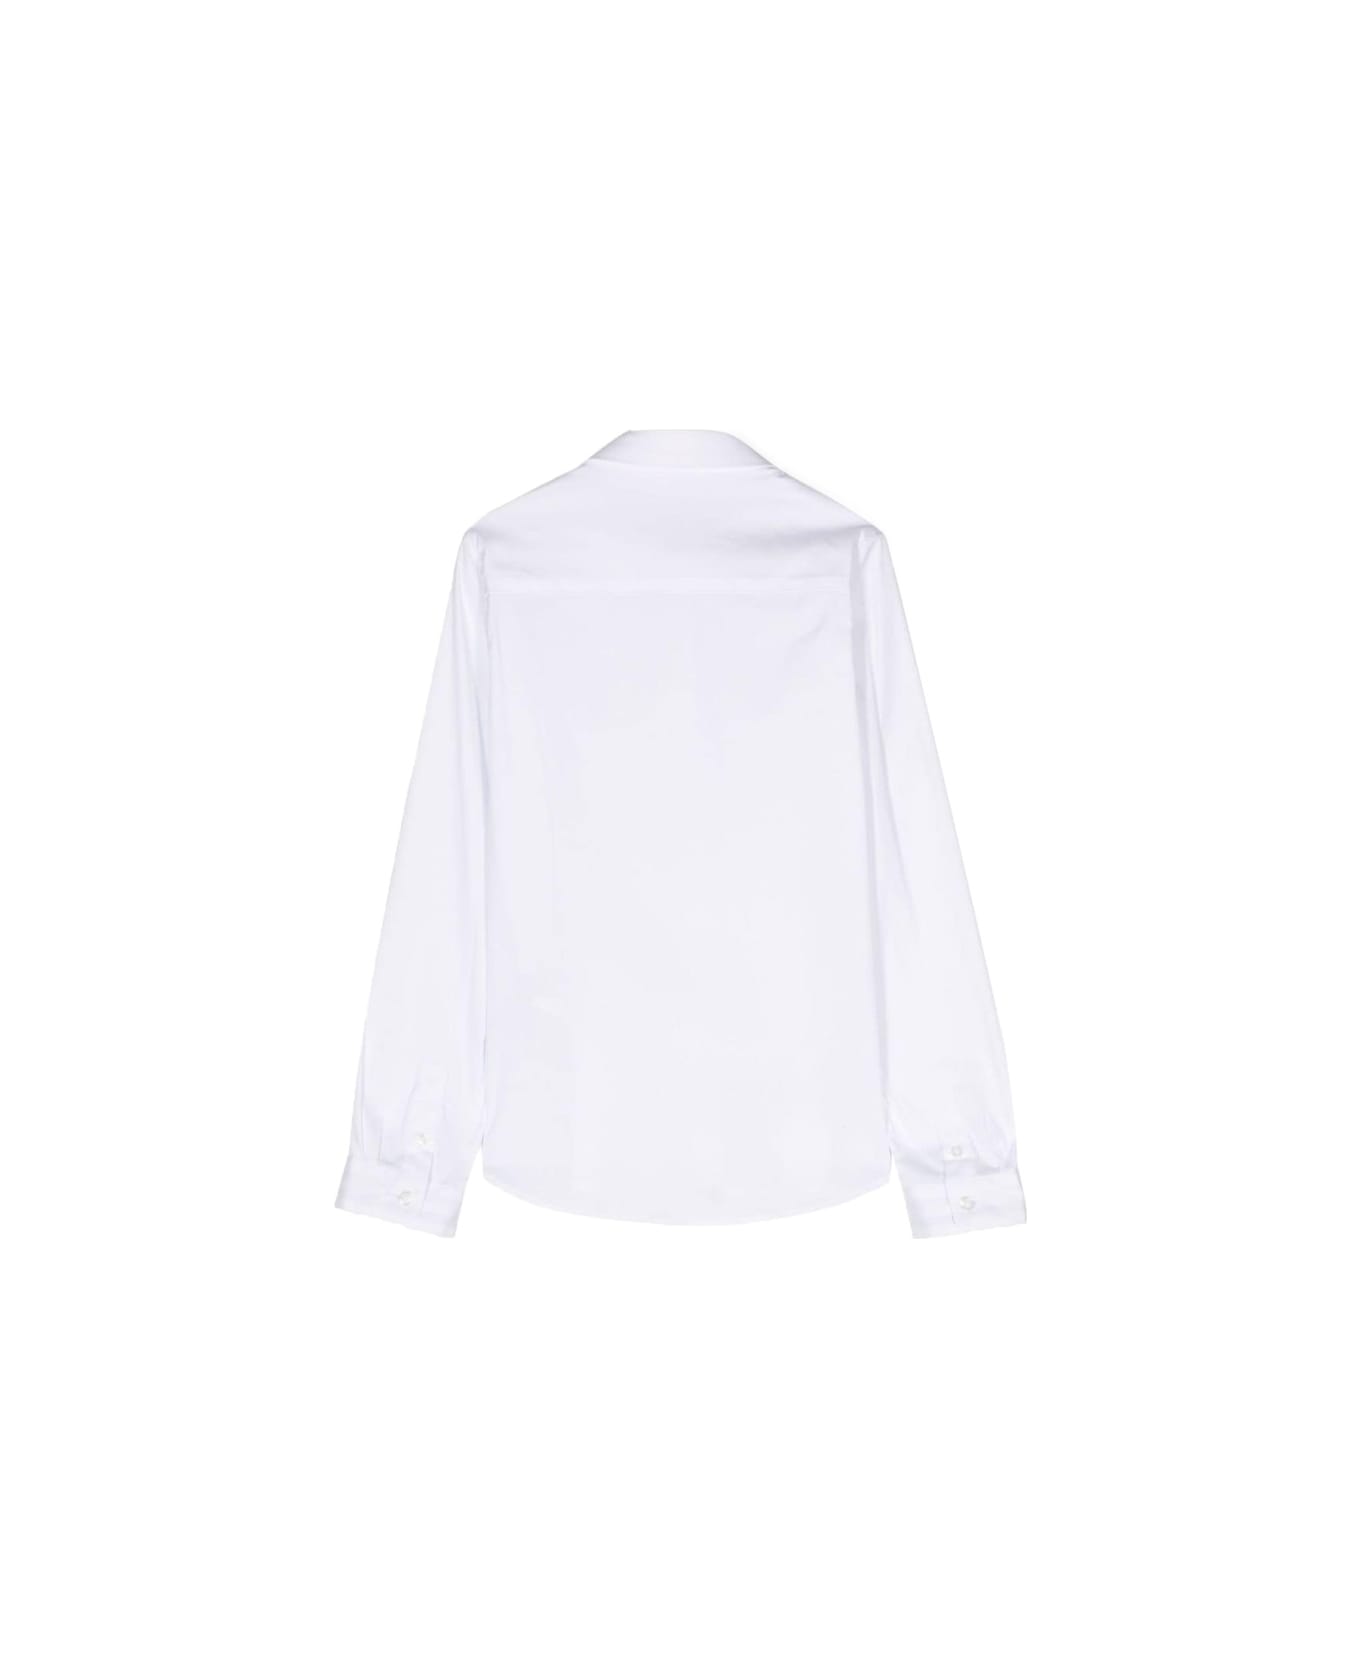 Hugo Boss Ml Shirt - WHITE